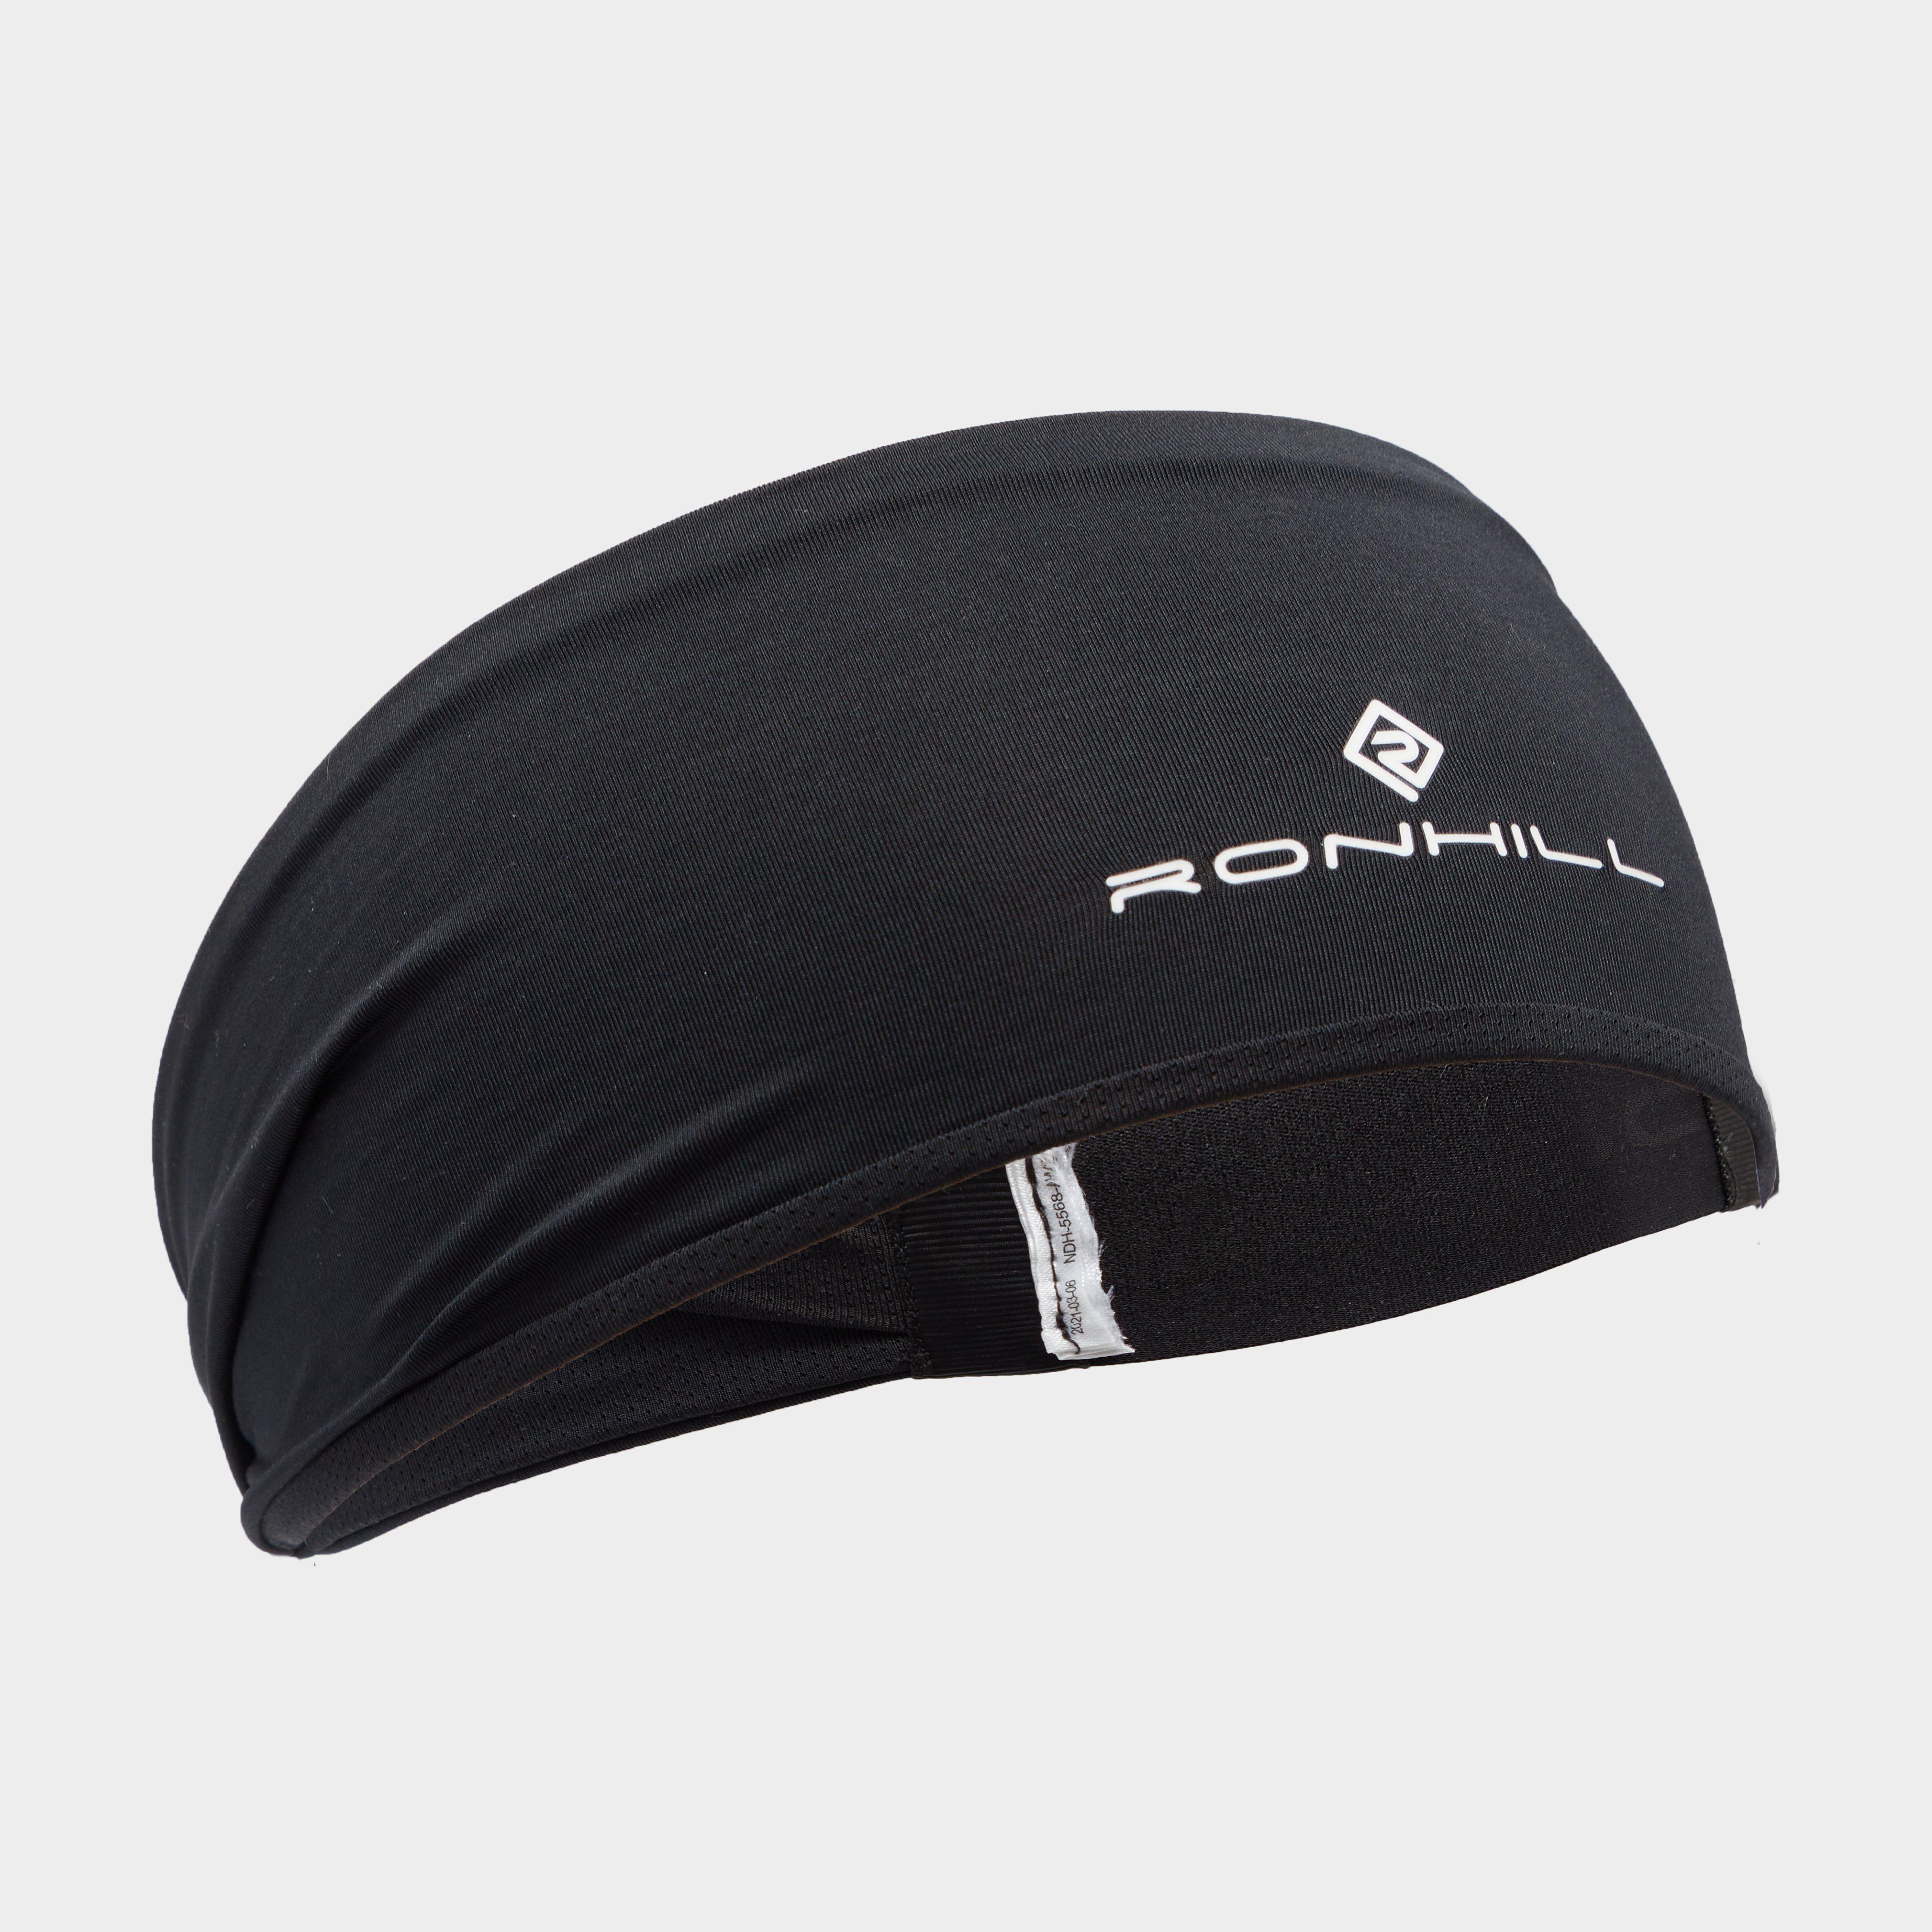 Image of Ronhill Reversible Revive Headband - Black/Black, Black/Black